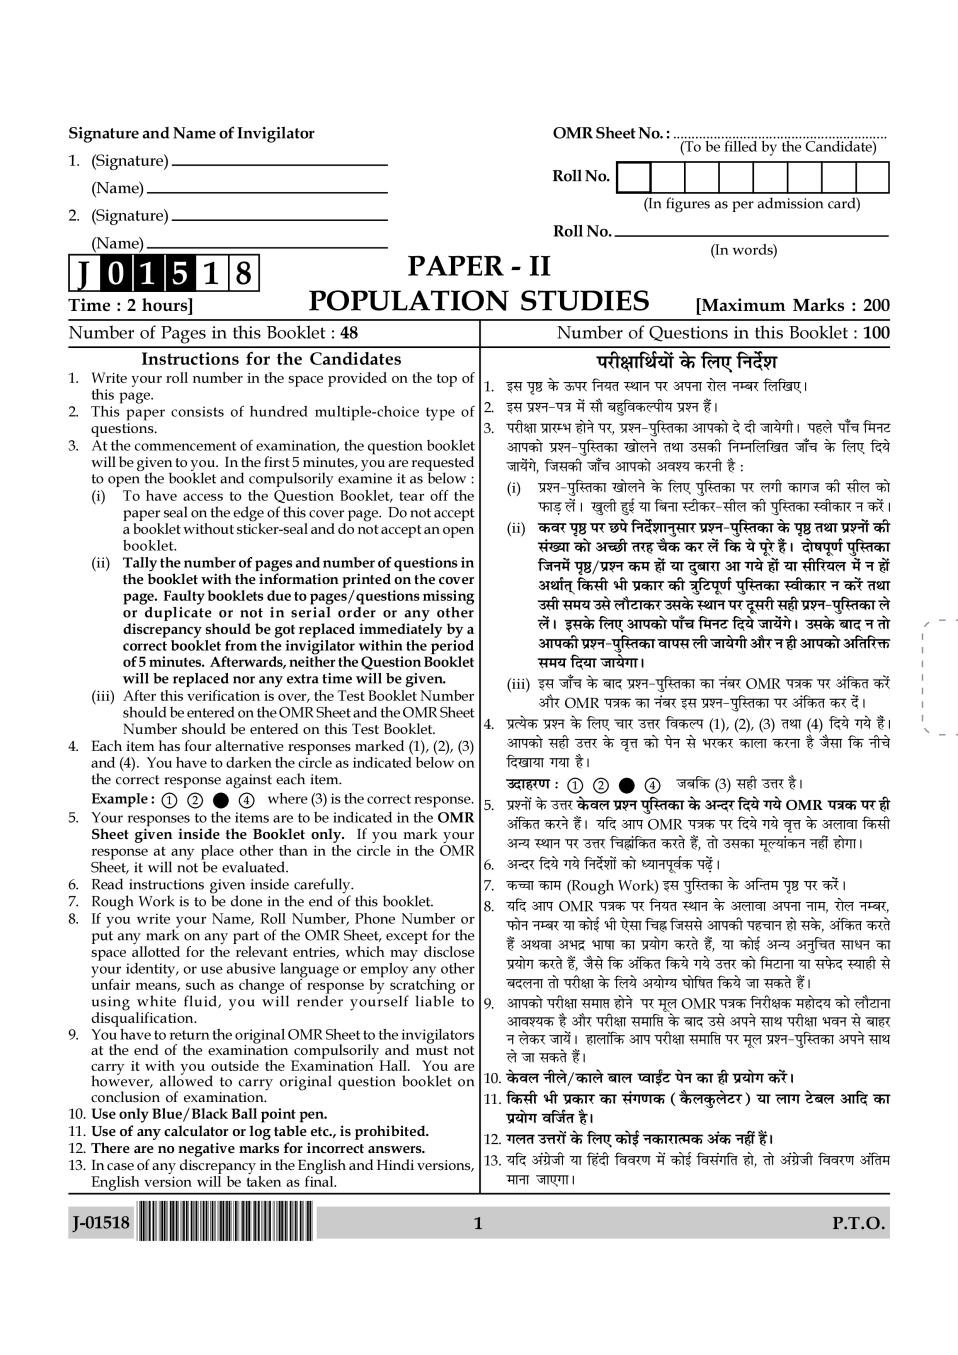 UGC NET Population Studies Question Paper 2018 - Page 1